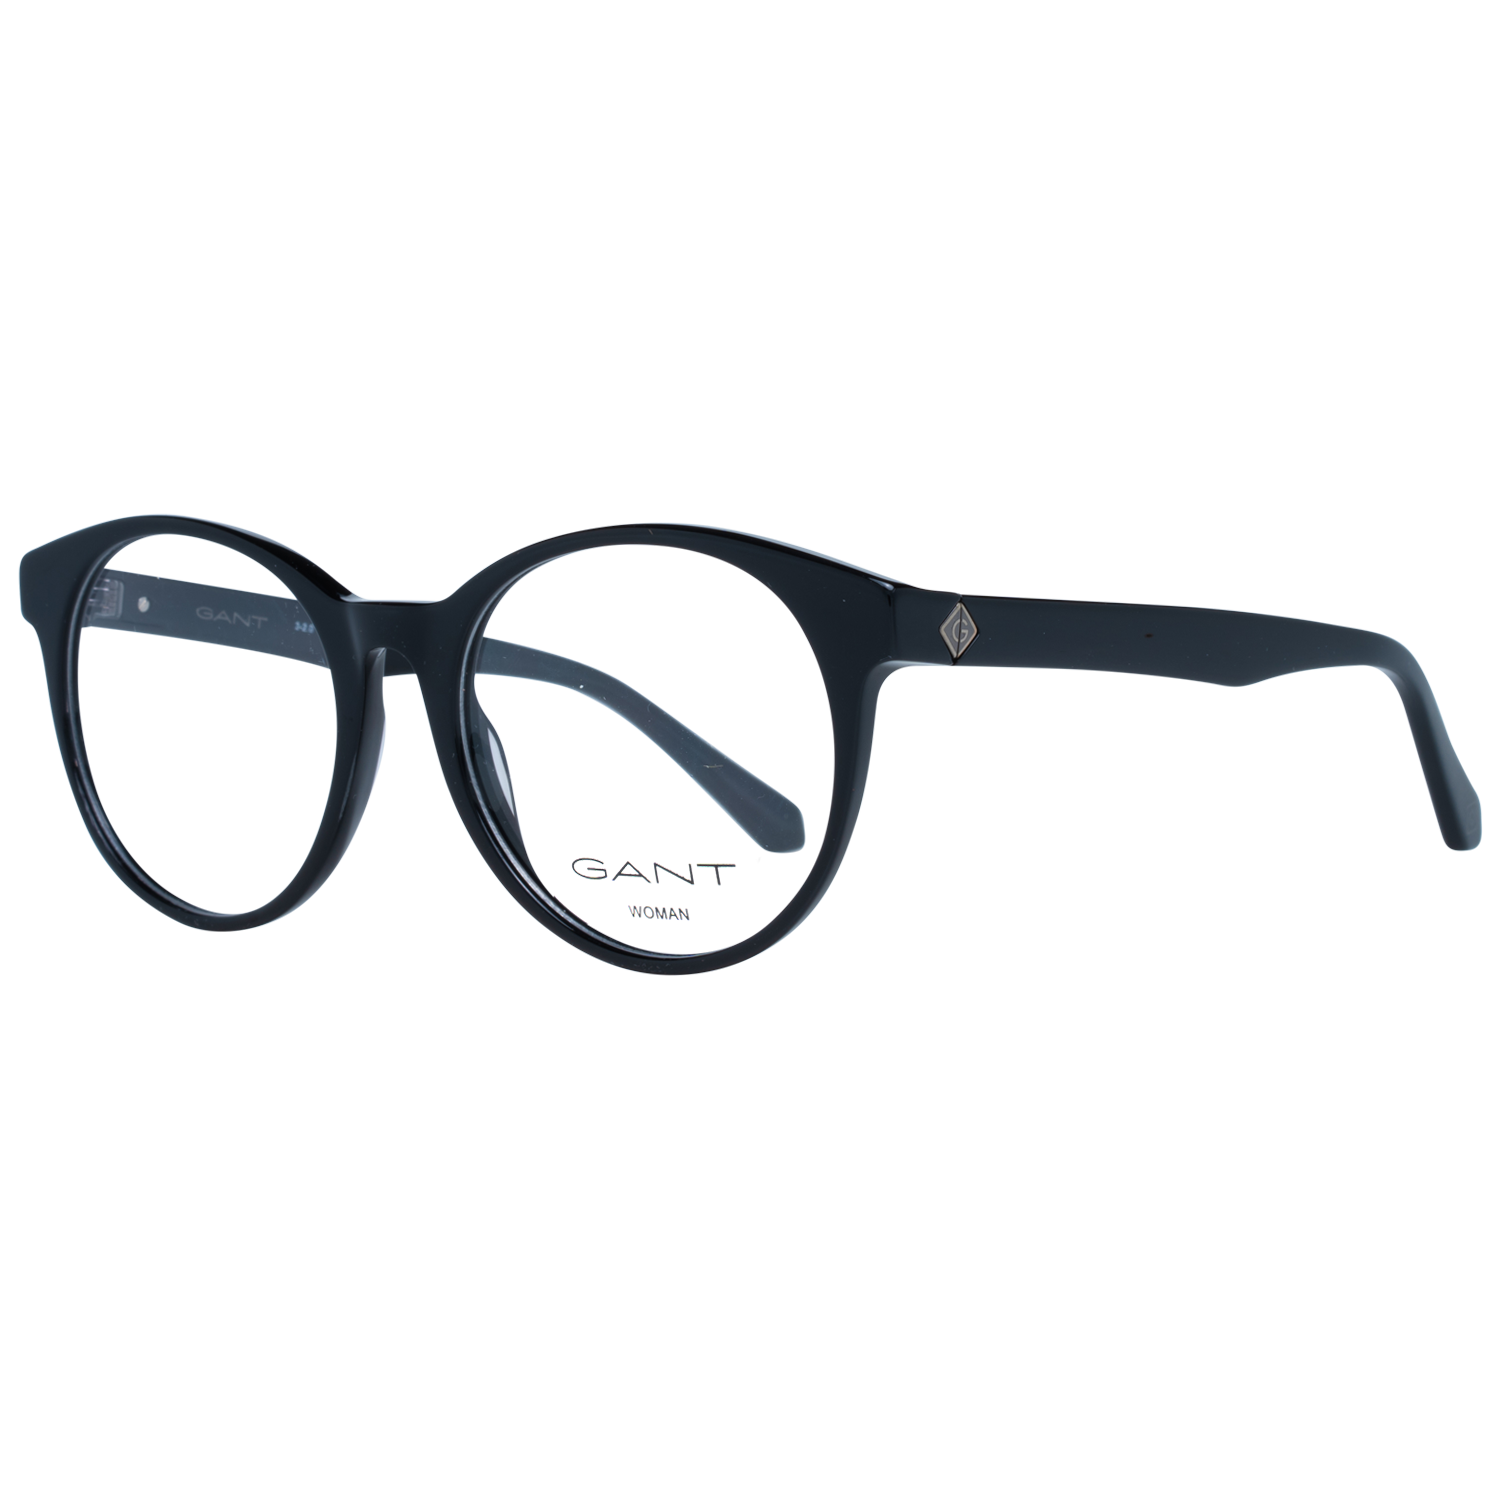 Gant Frames Gant Glasses Frames GA4110 001 53 Eyeglasses Eyewear UK USA Australia 